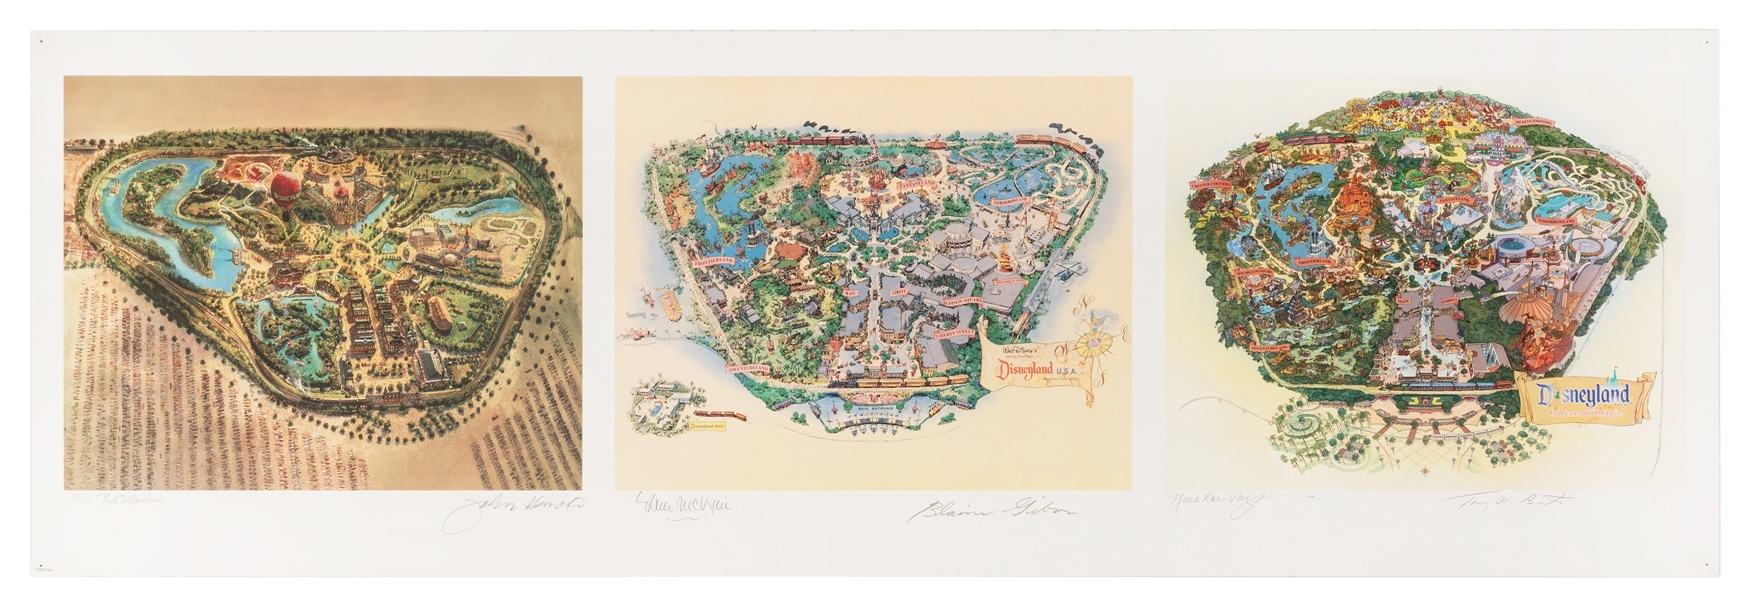 Disneyland: 45 years of Magic 3 Disneyland maps signed lithograph.